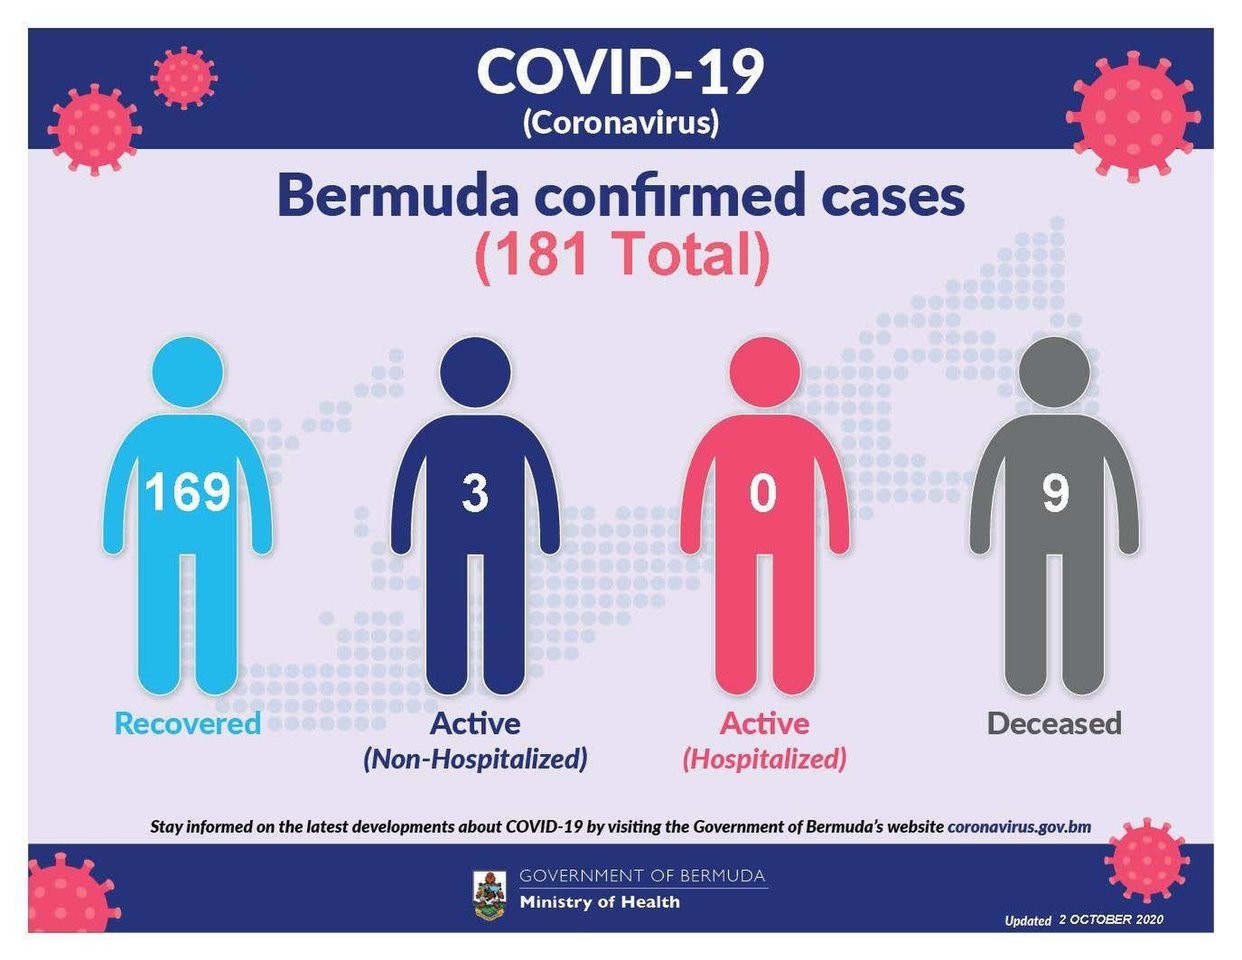 No new COVID-19 cases reported in Bermuda, 2 October